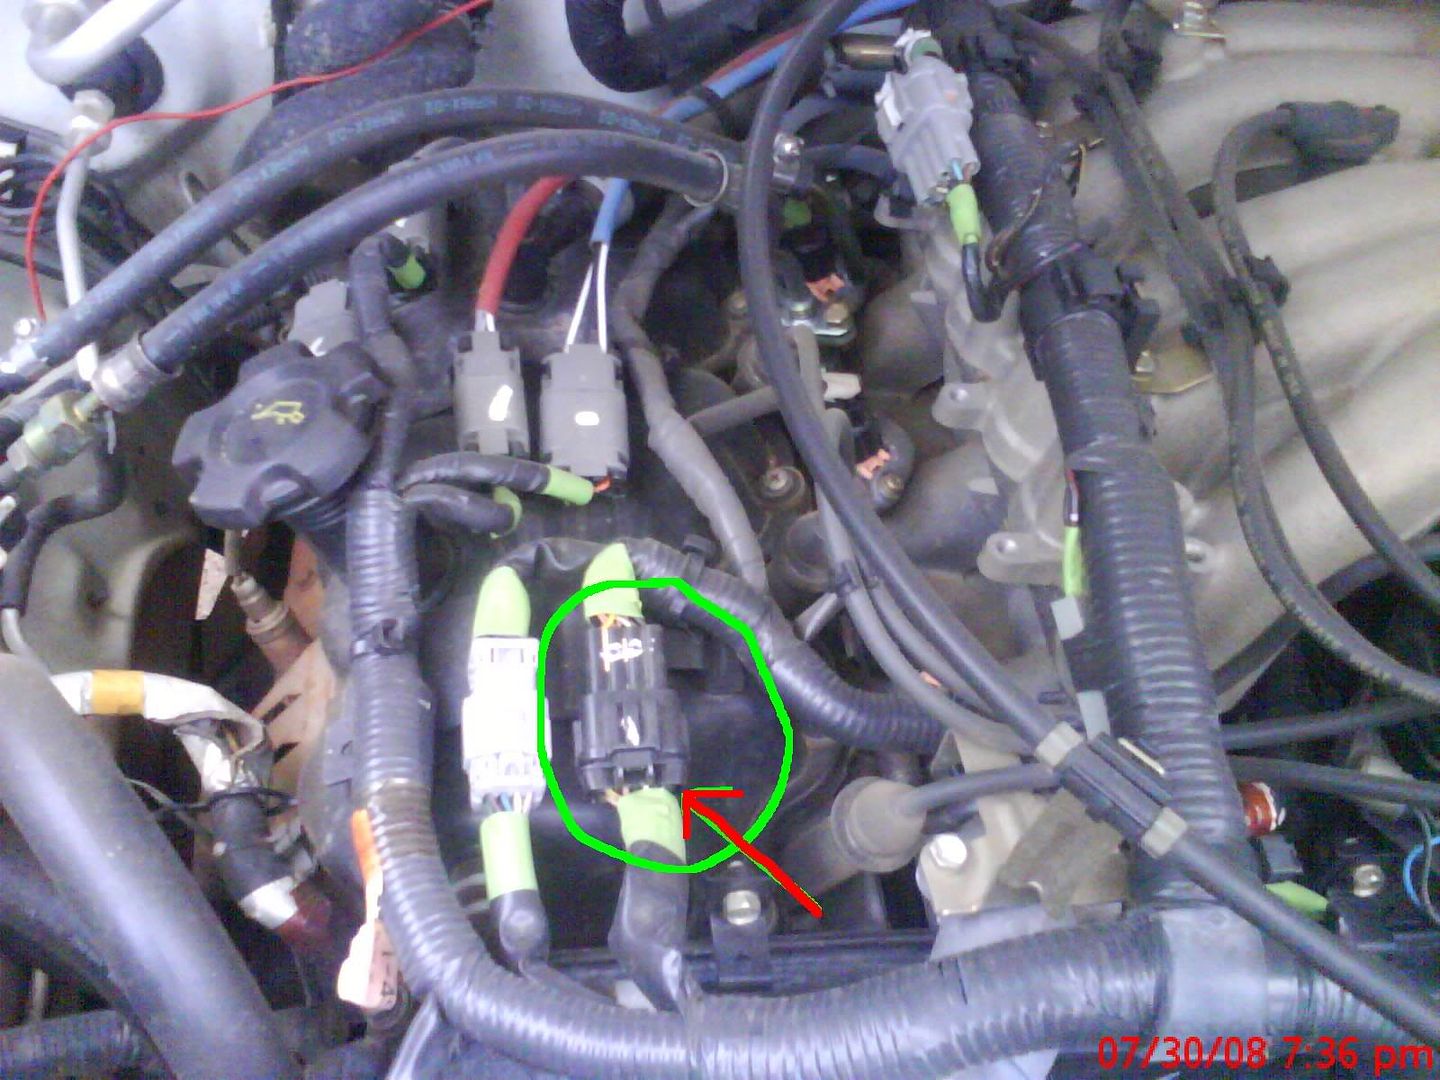 Nissan xterra knock sensor code #5